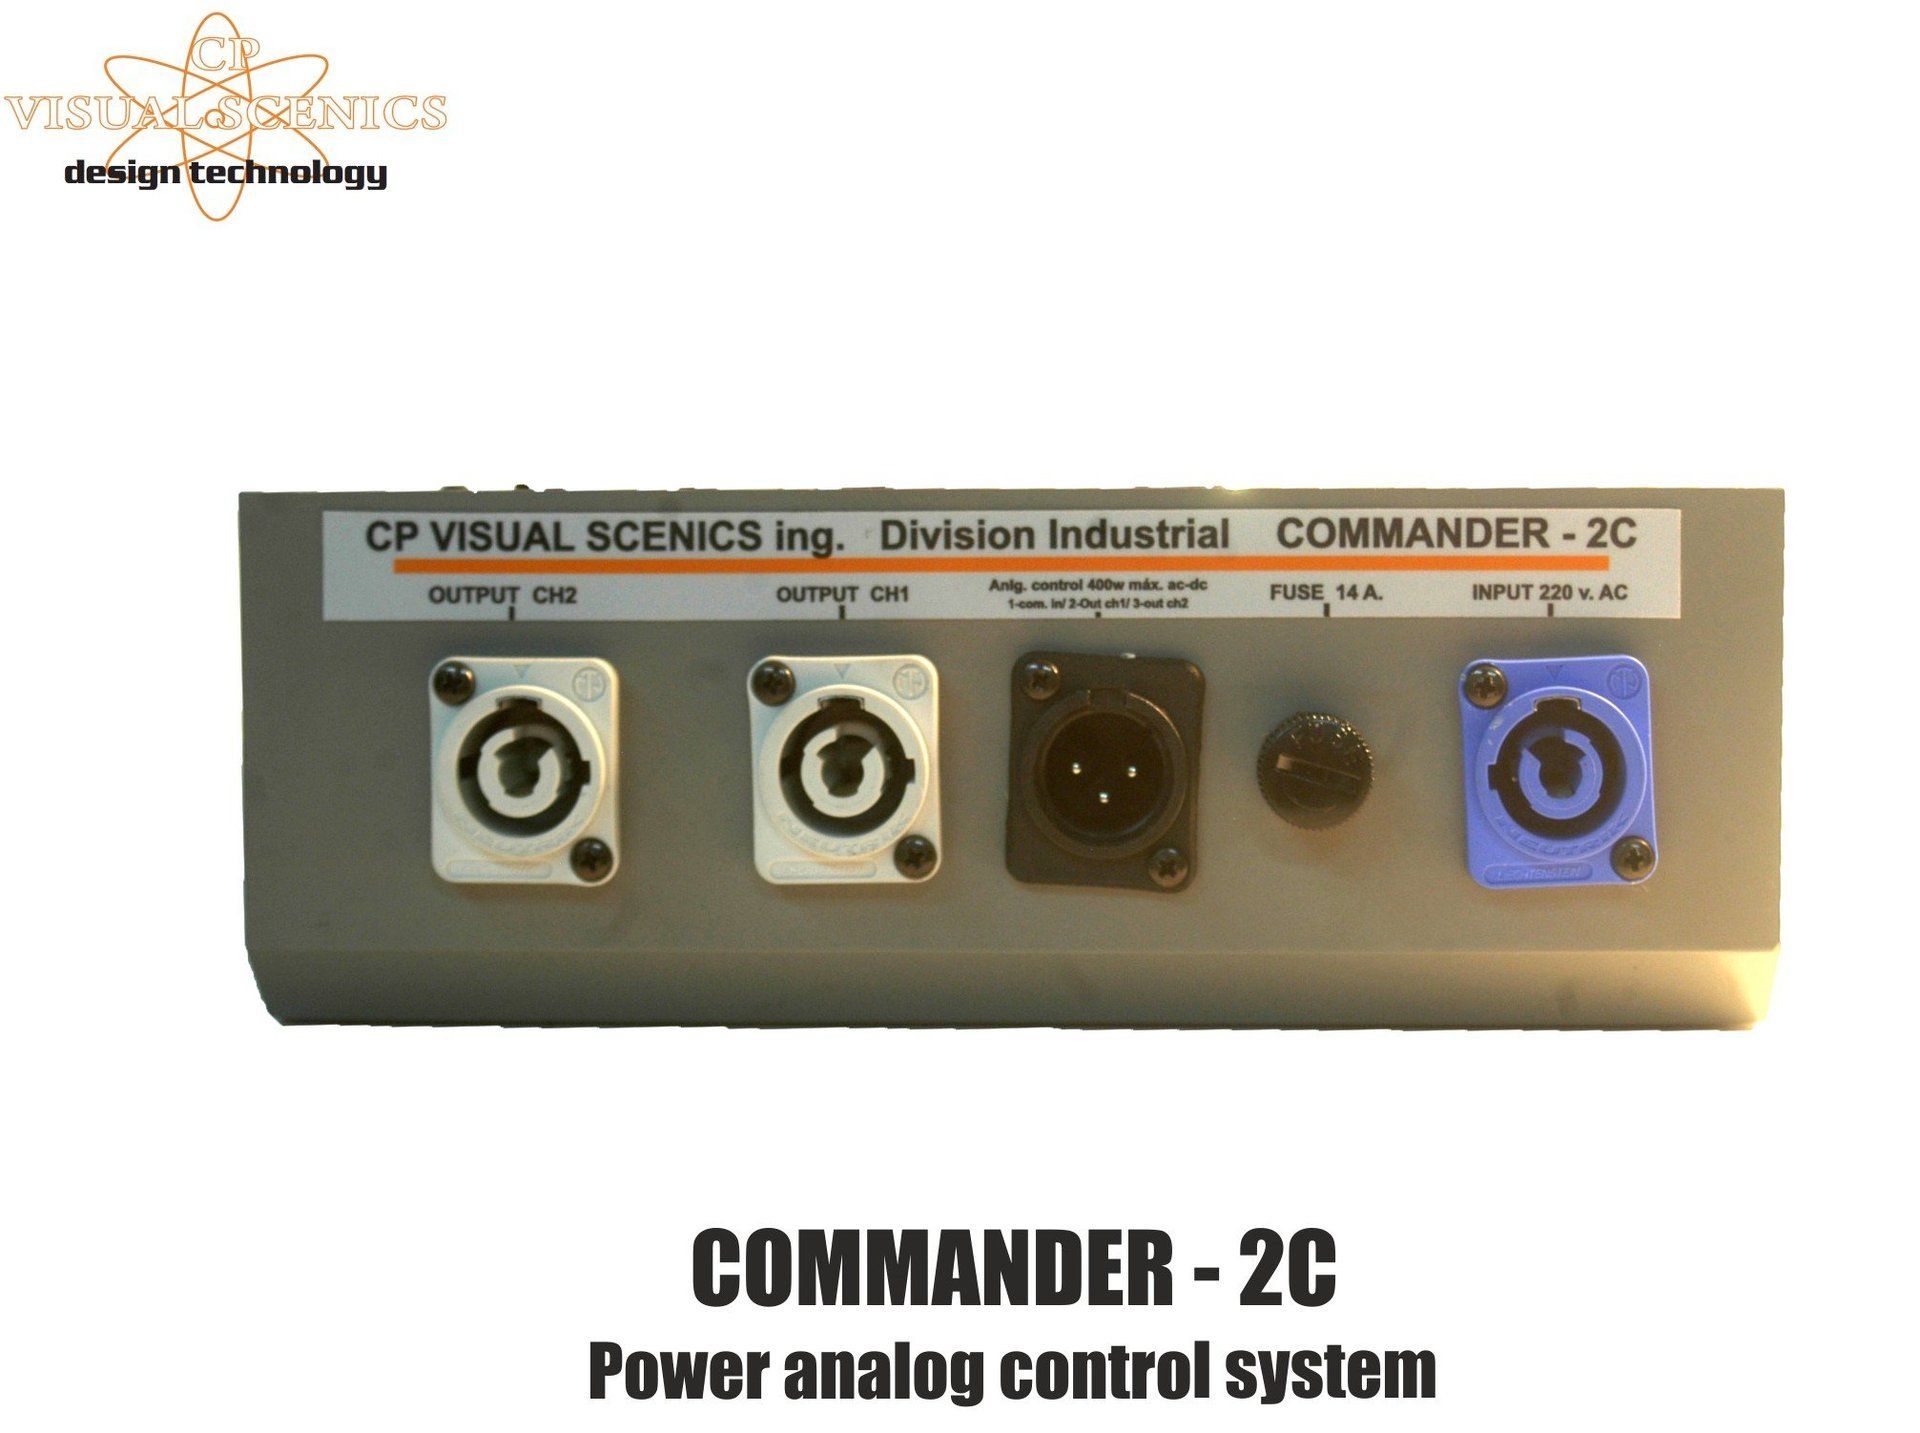 COMMANDER-2C rear